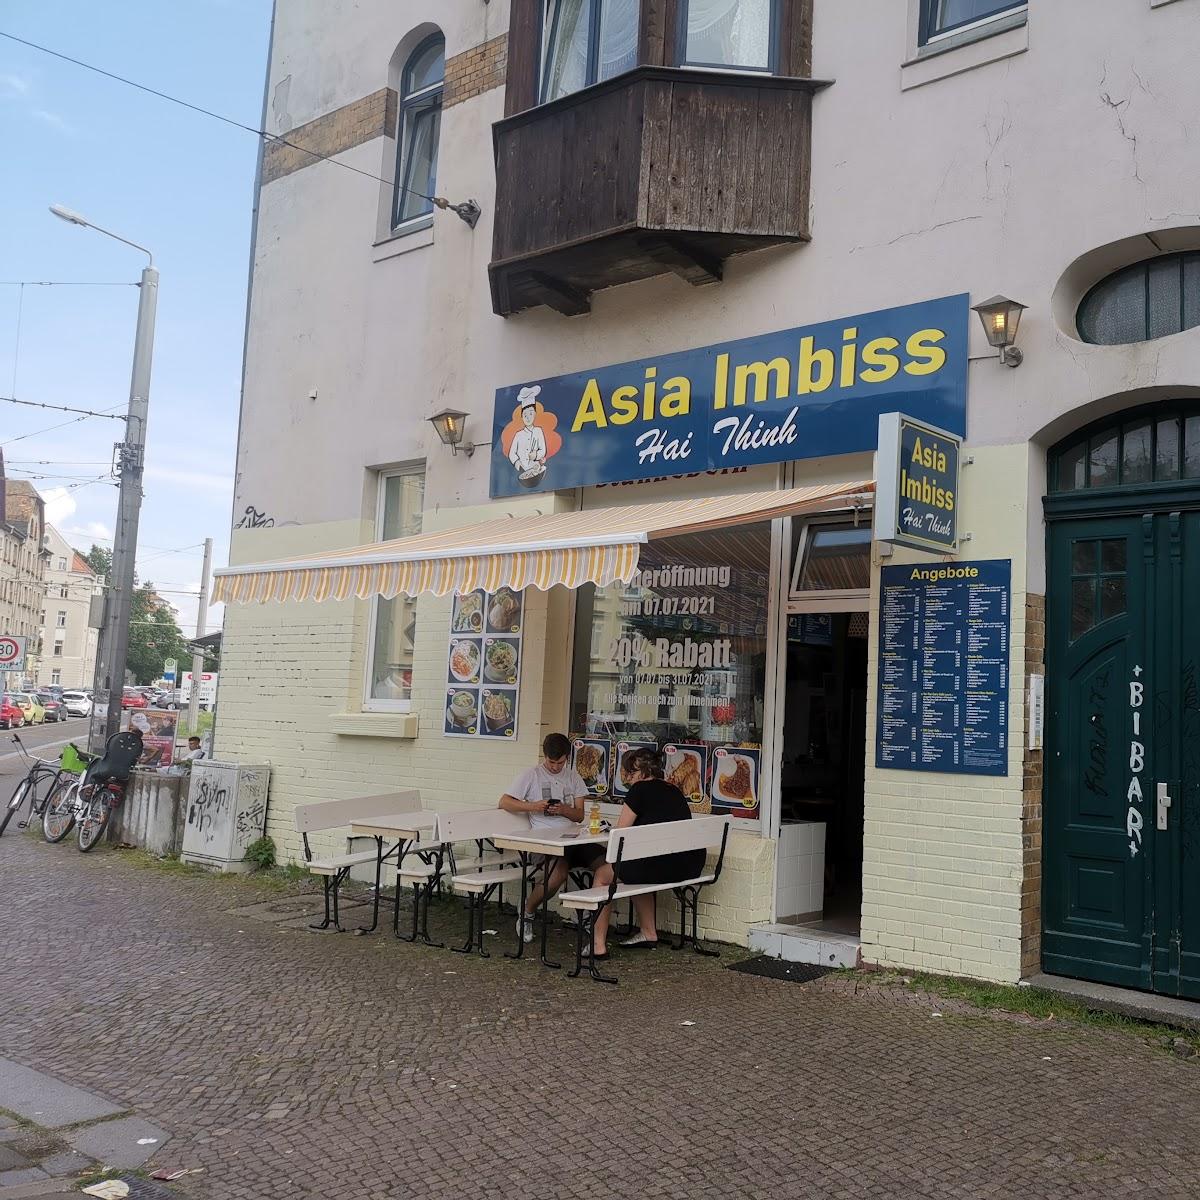 Restaurant "Asia Imbiss Hai Thinh" in Leipzig